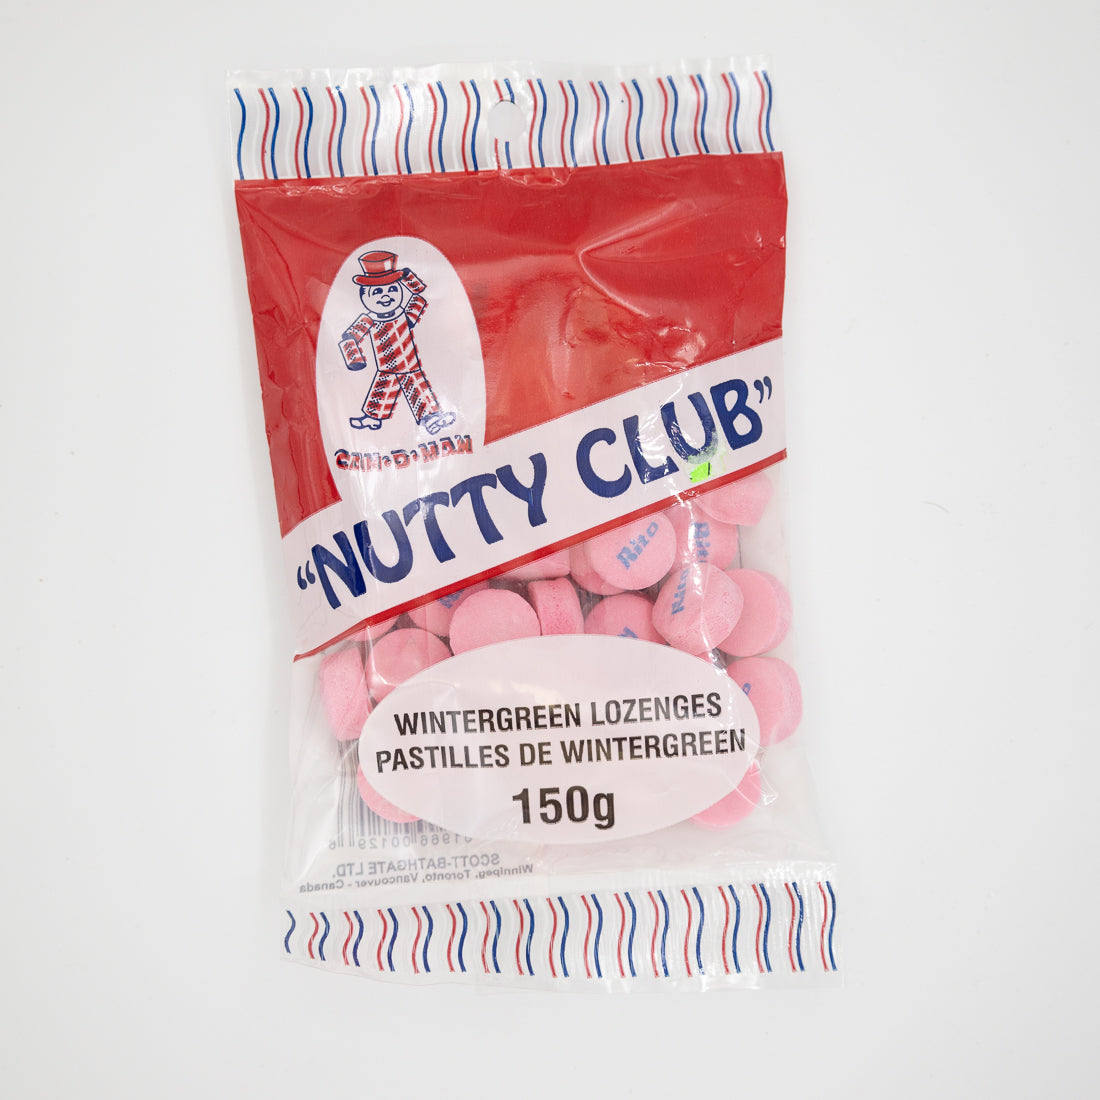 Nutty Club Wintergreen Lozenges